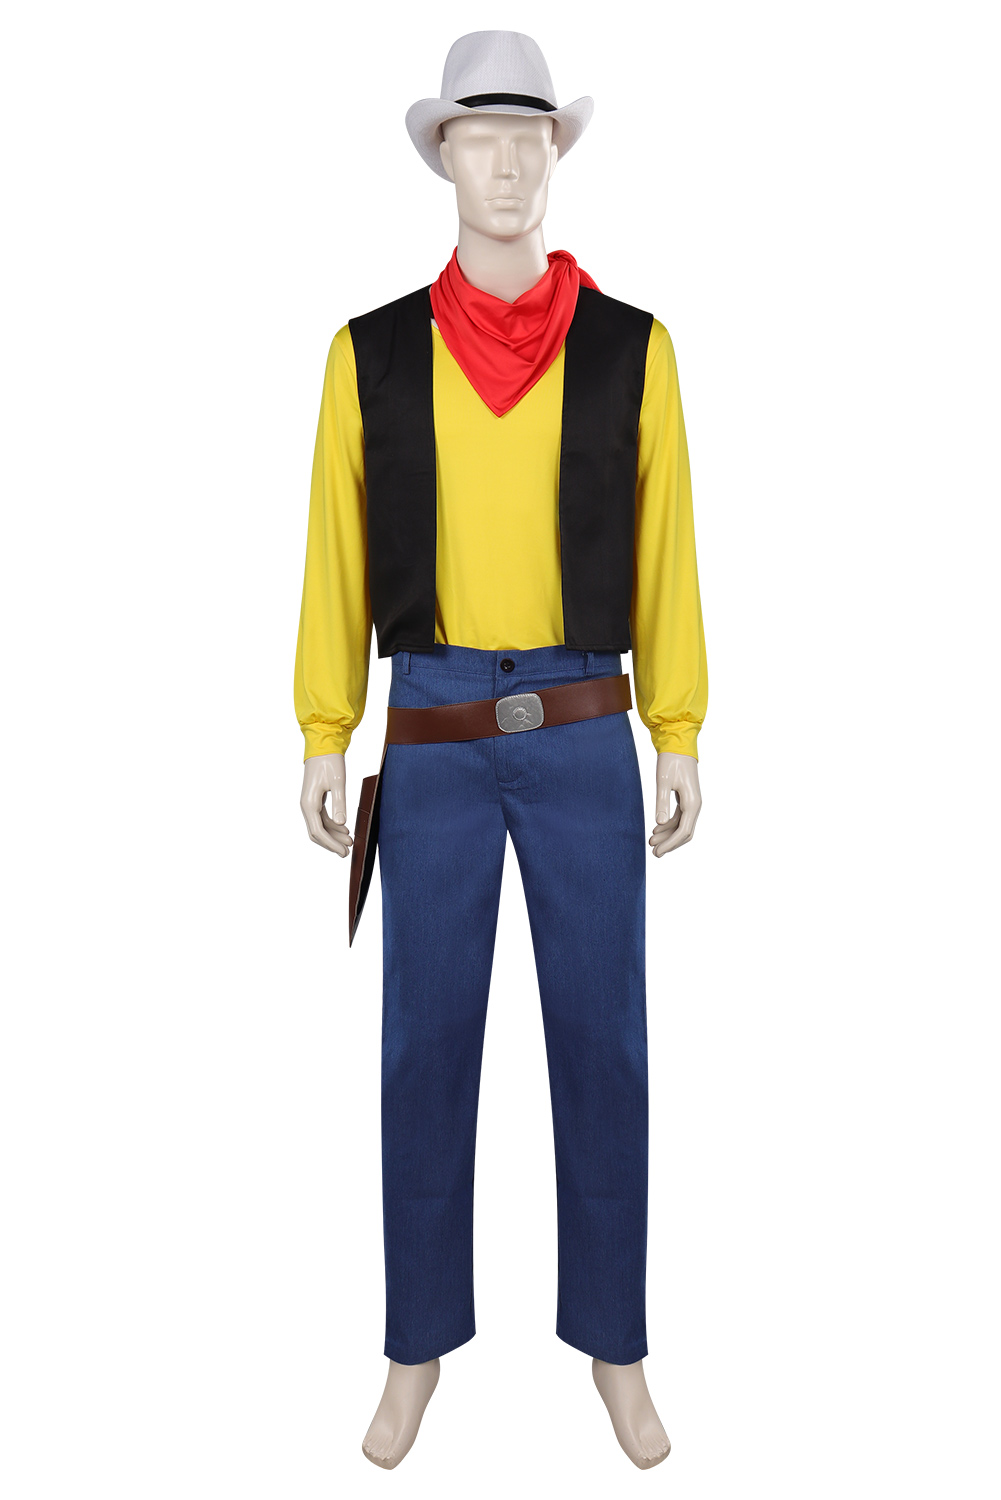 TV Lucky Luke Luke Outfits Halloween Carnival Suit Cosplay Costume